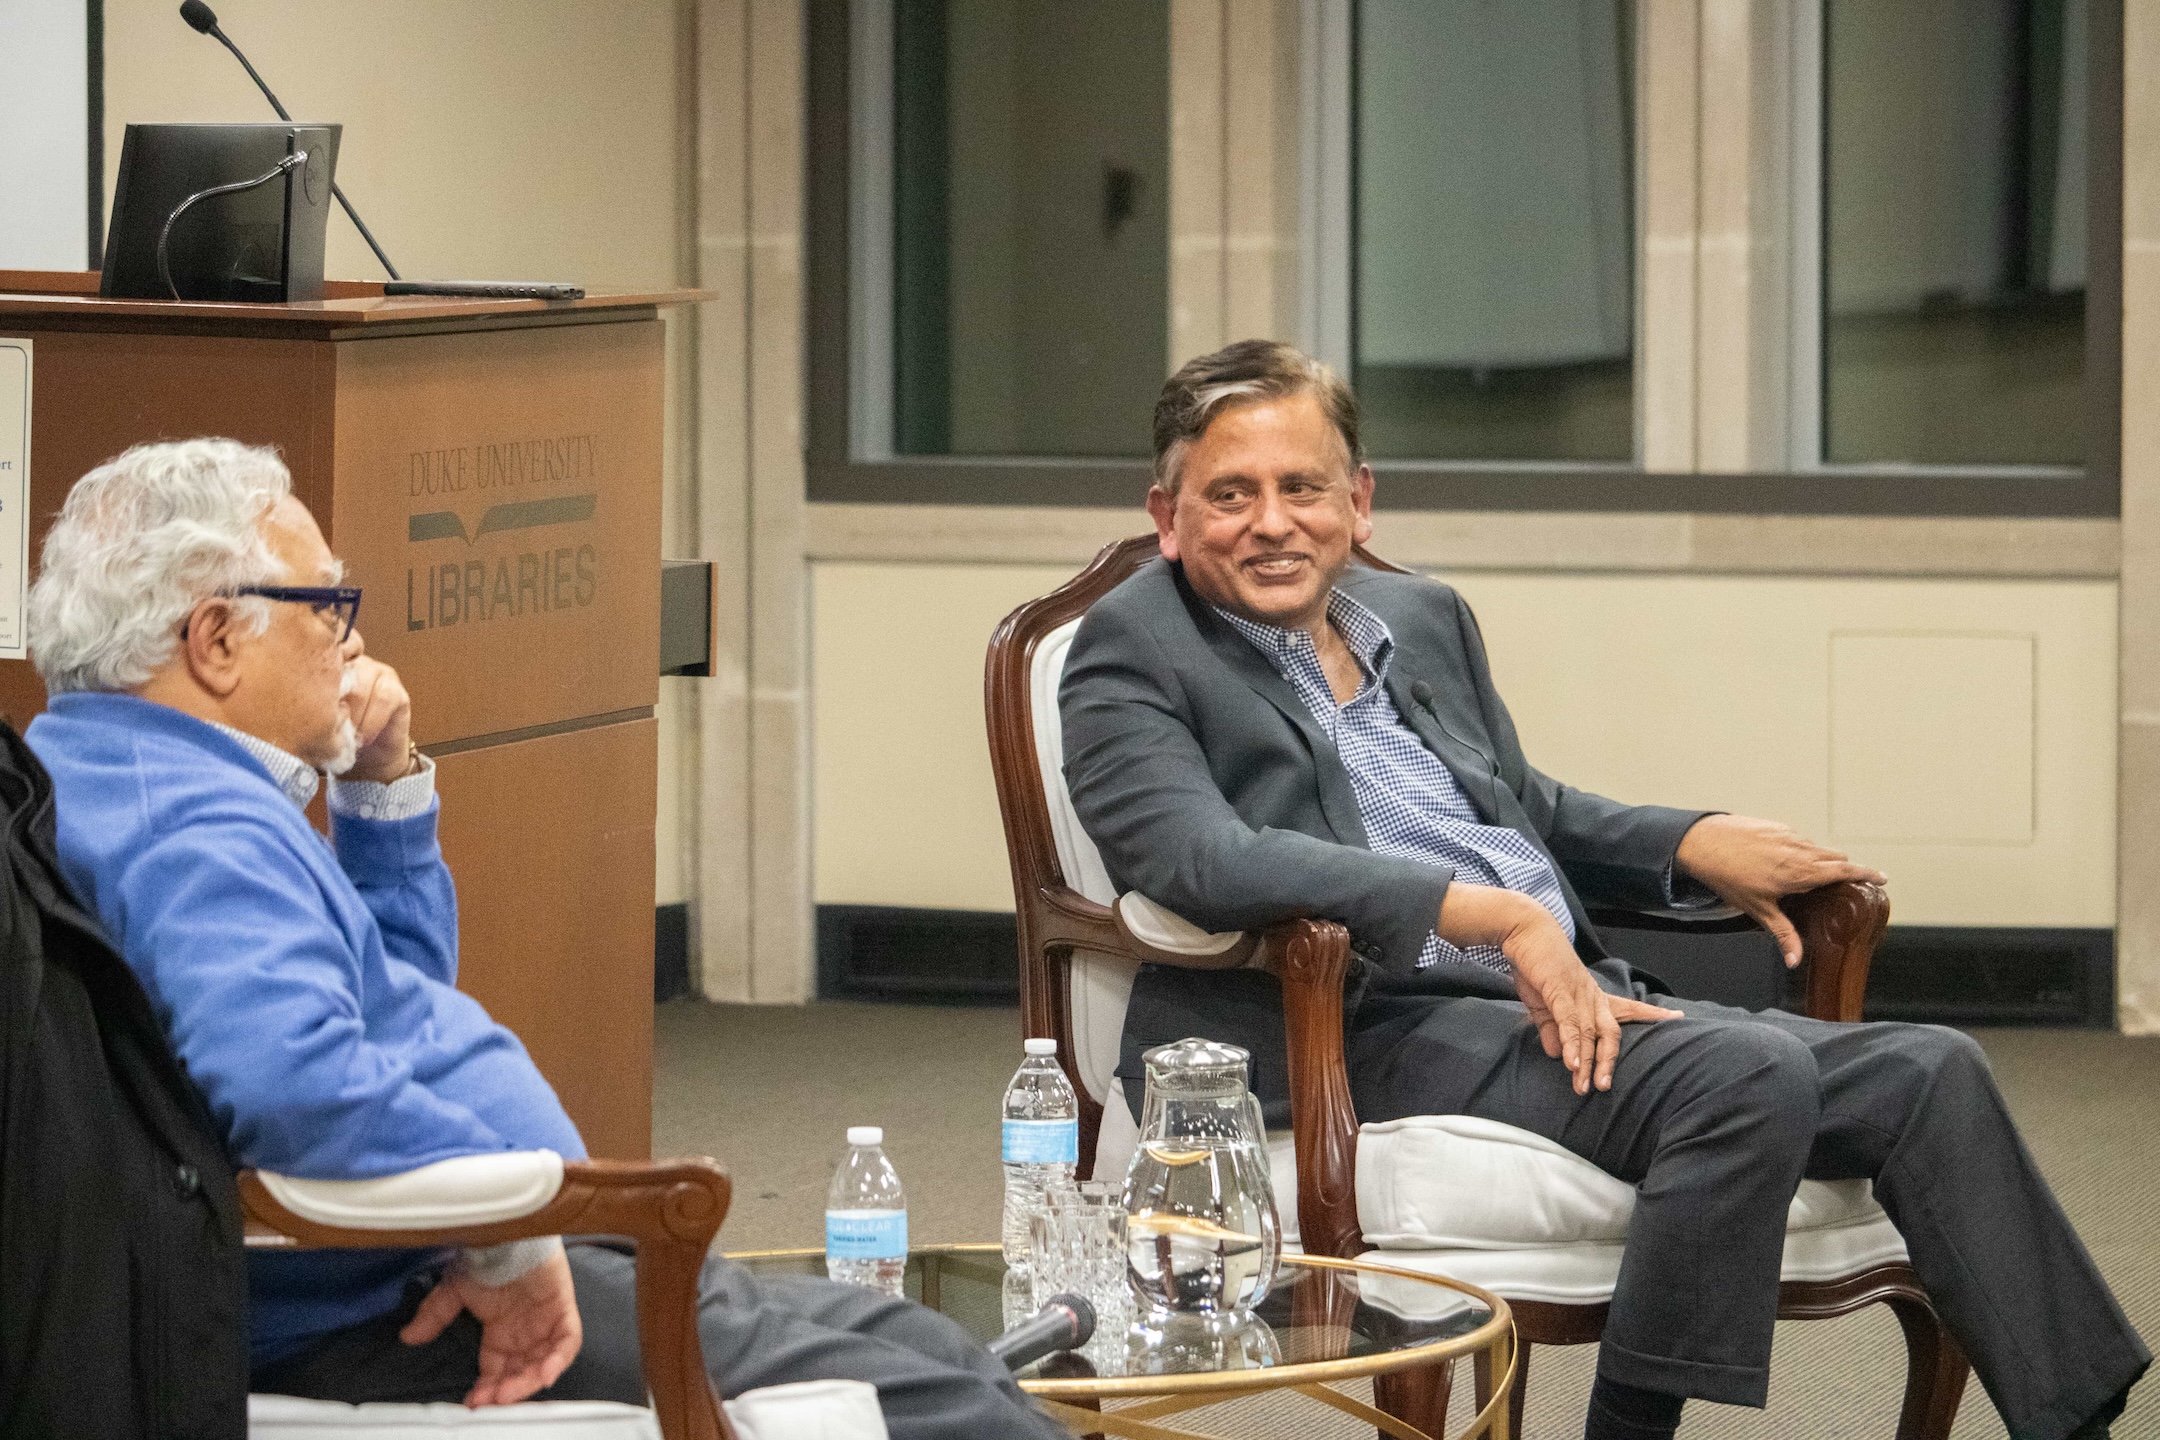 Dr. George (right) in conversation with Professor Prasenjit Duara, Duke University. (Photo credit: Rhiannon See)